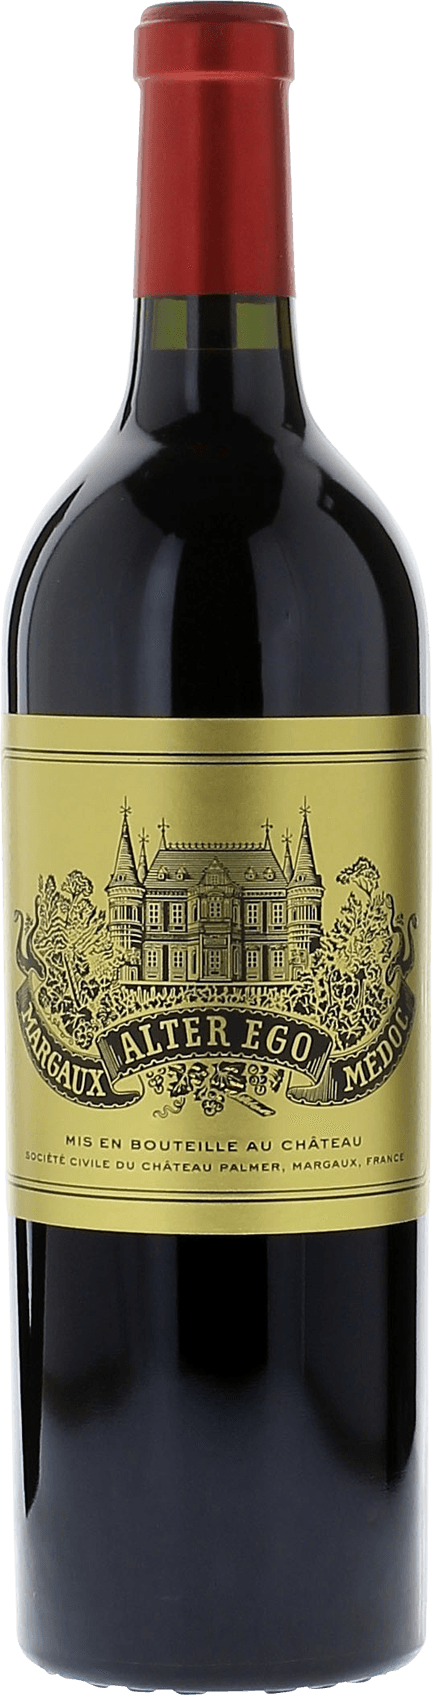 Alter ego 2016 2me Grand cru class Margaux, Bordeaux rouge